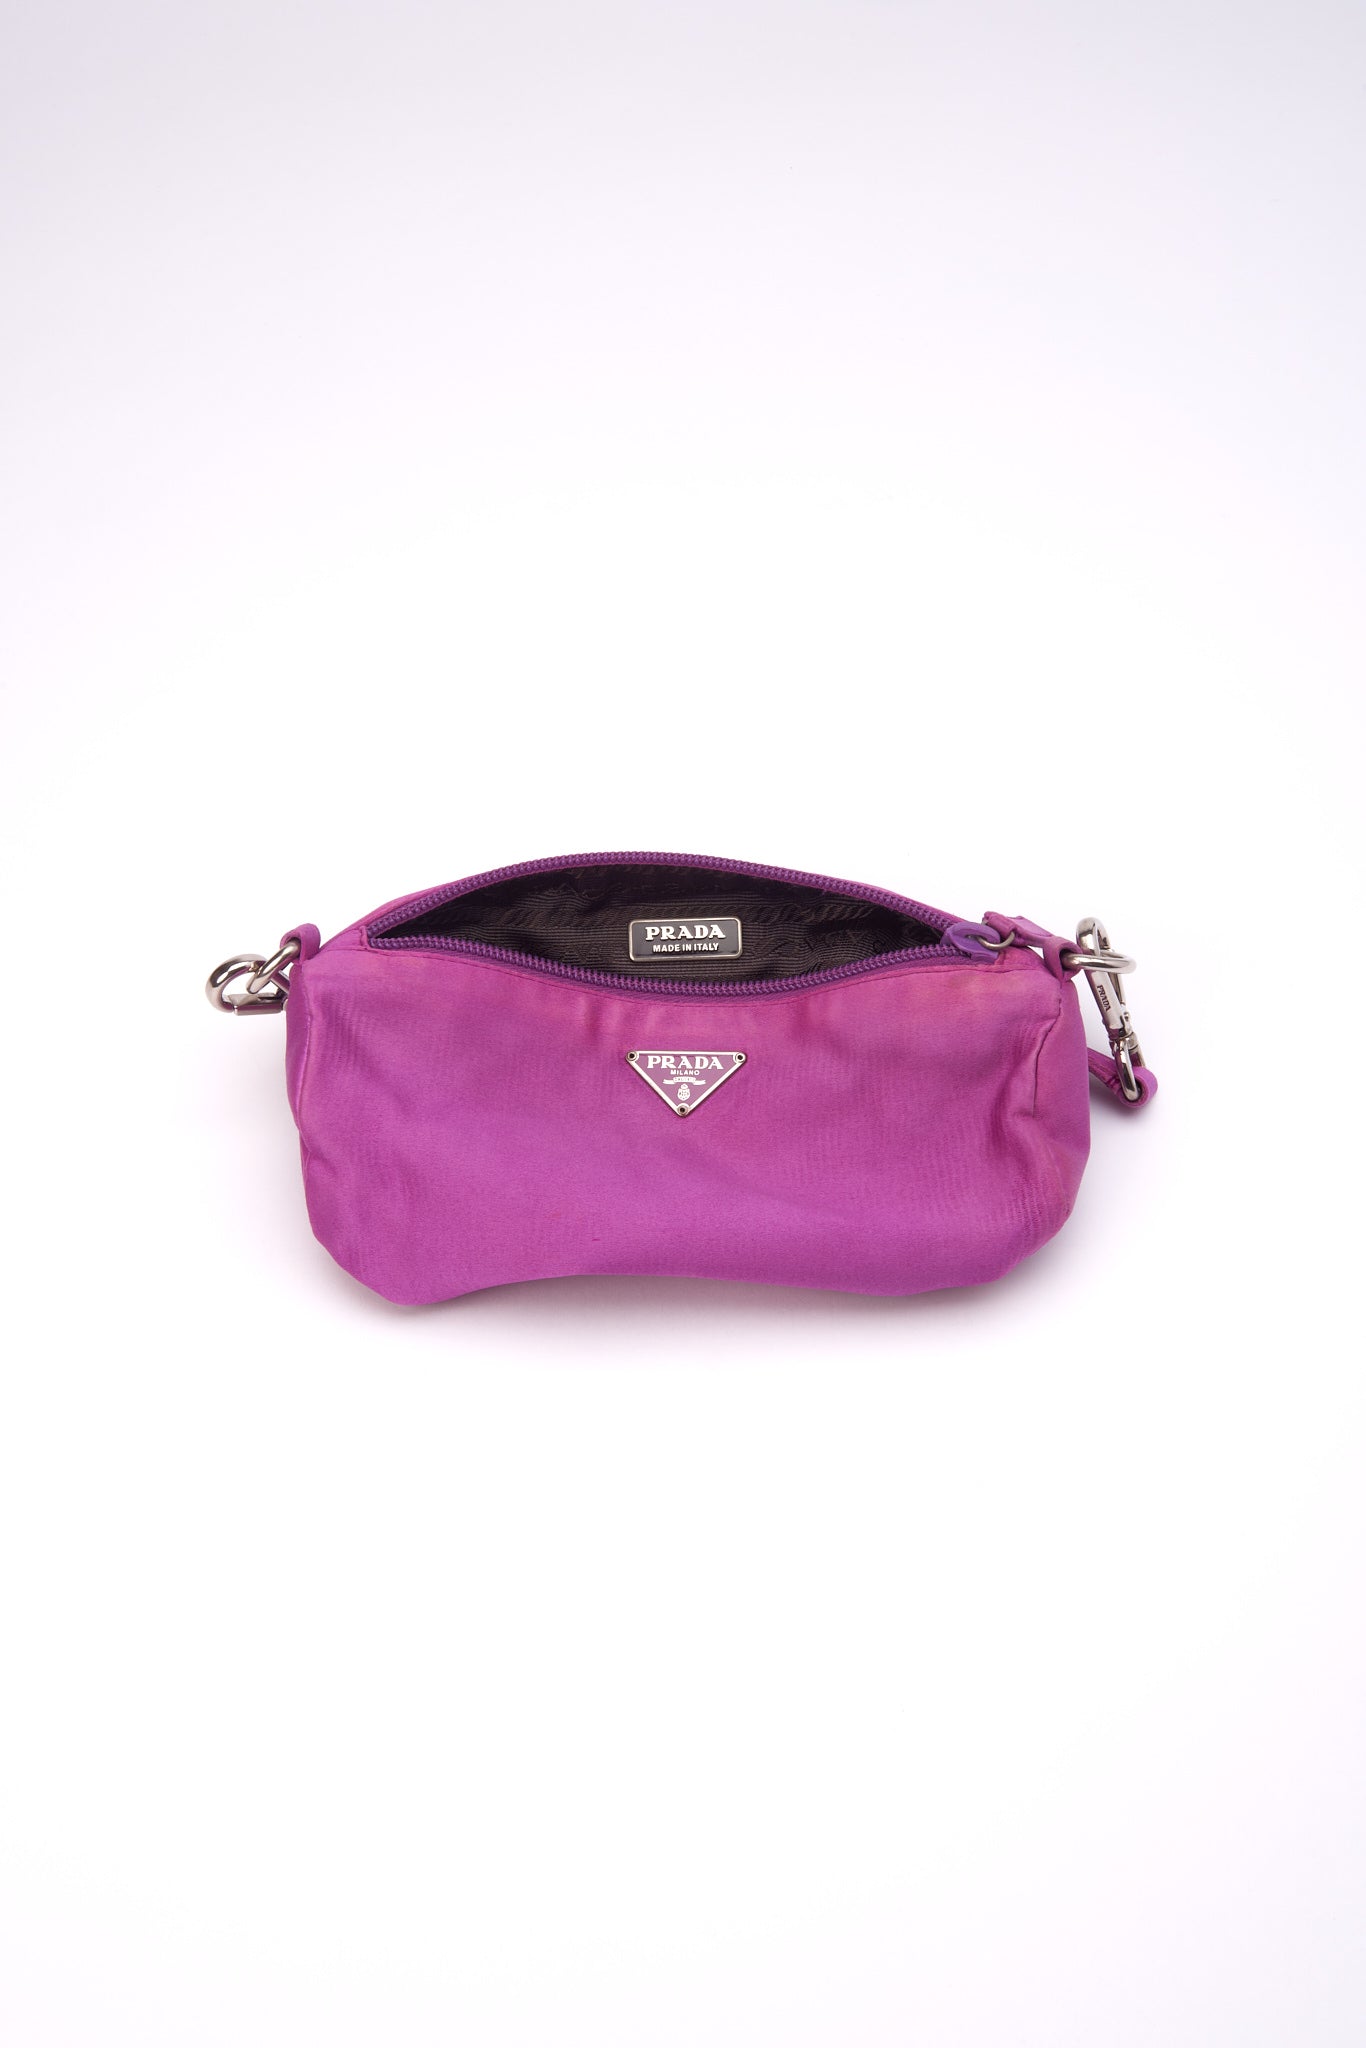 Prada purple Nylon Party Bag